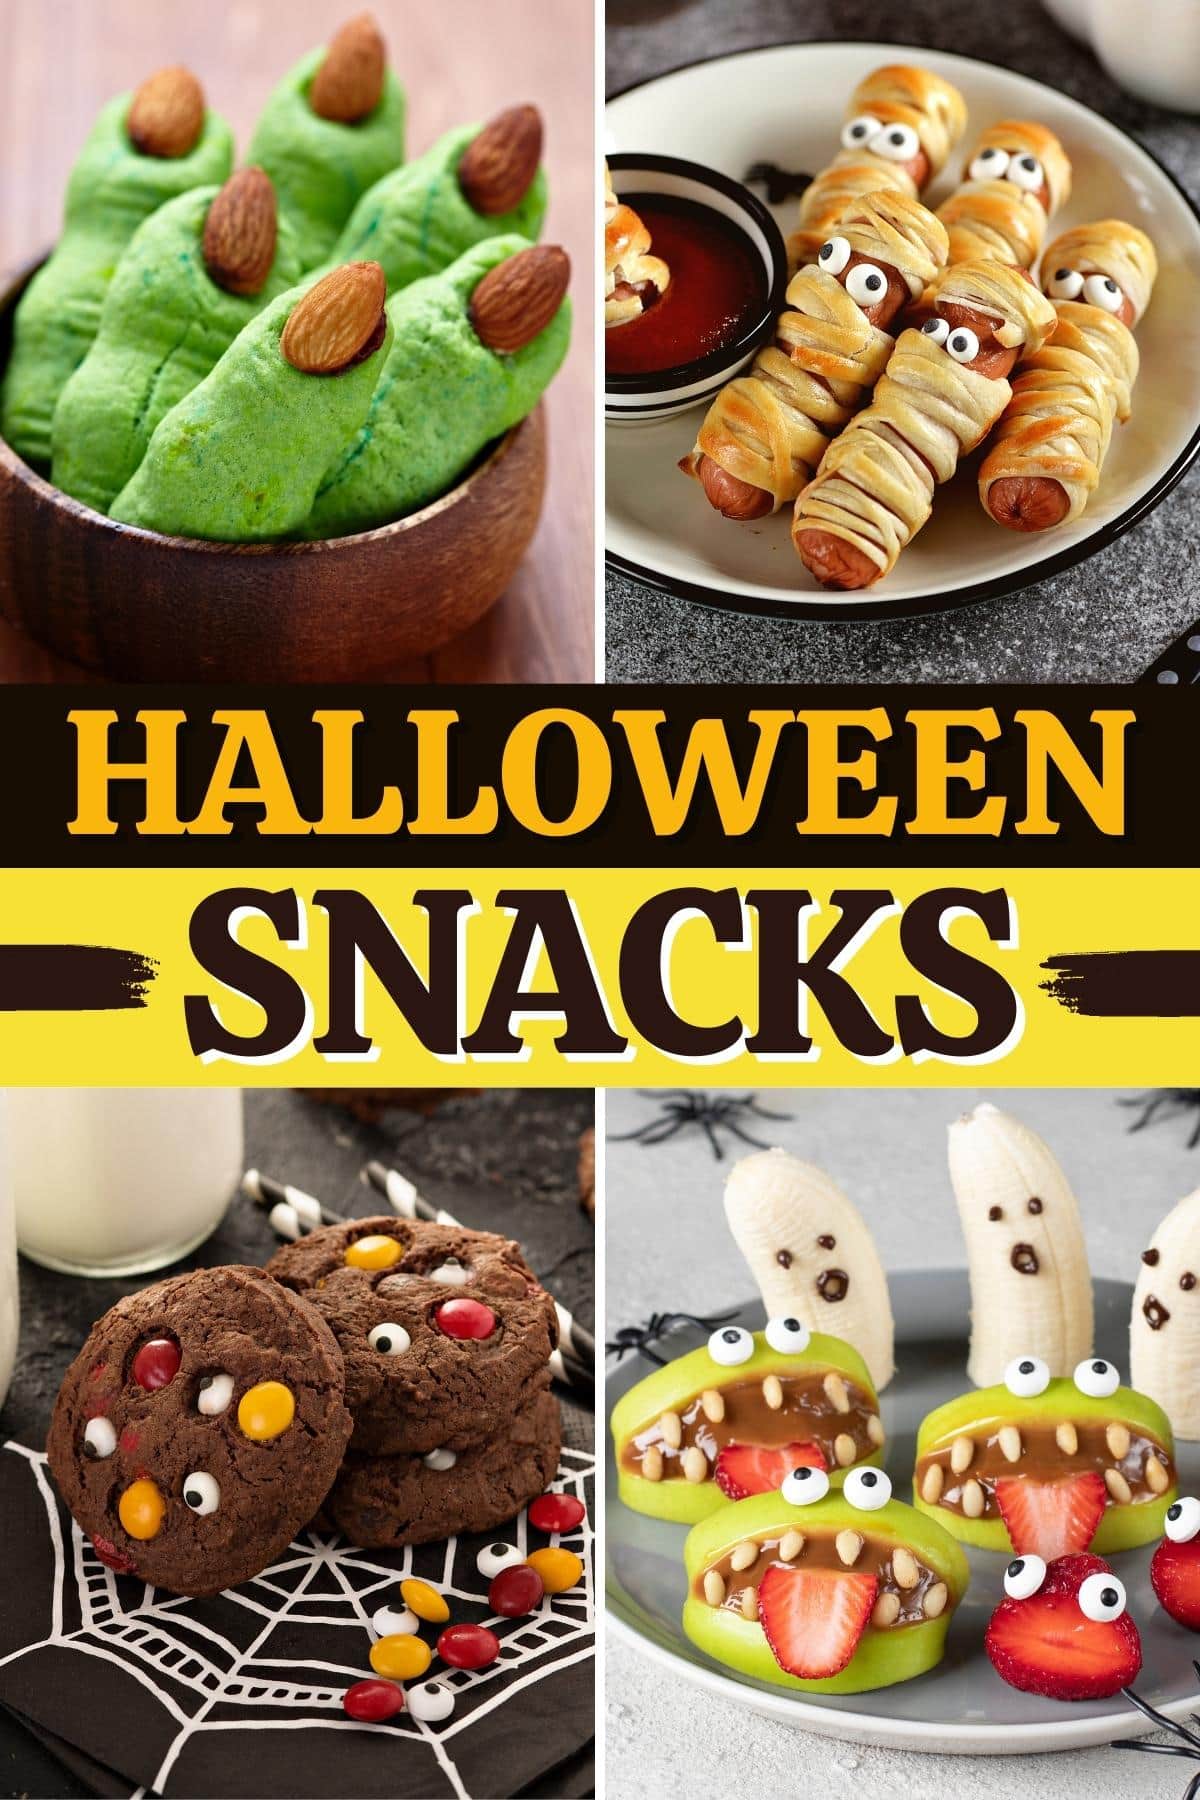 31 Easy Halloween Snacks and Spooky Treat Ideas - Insanely Good